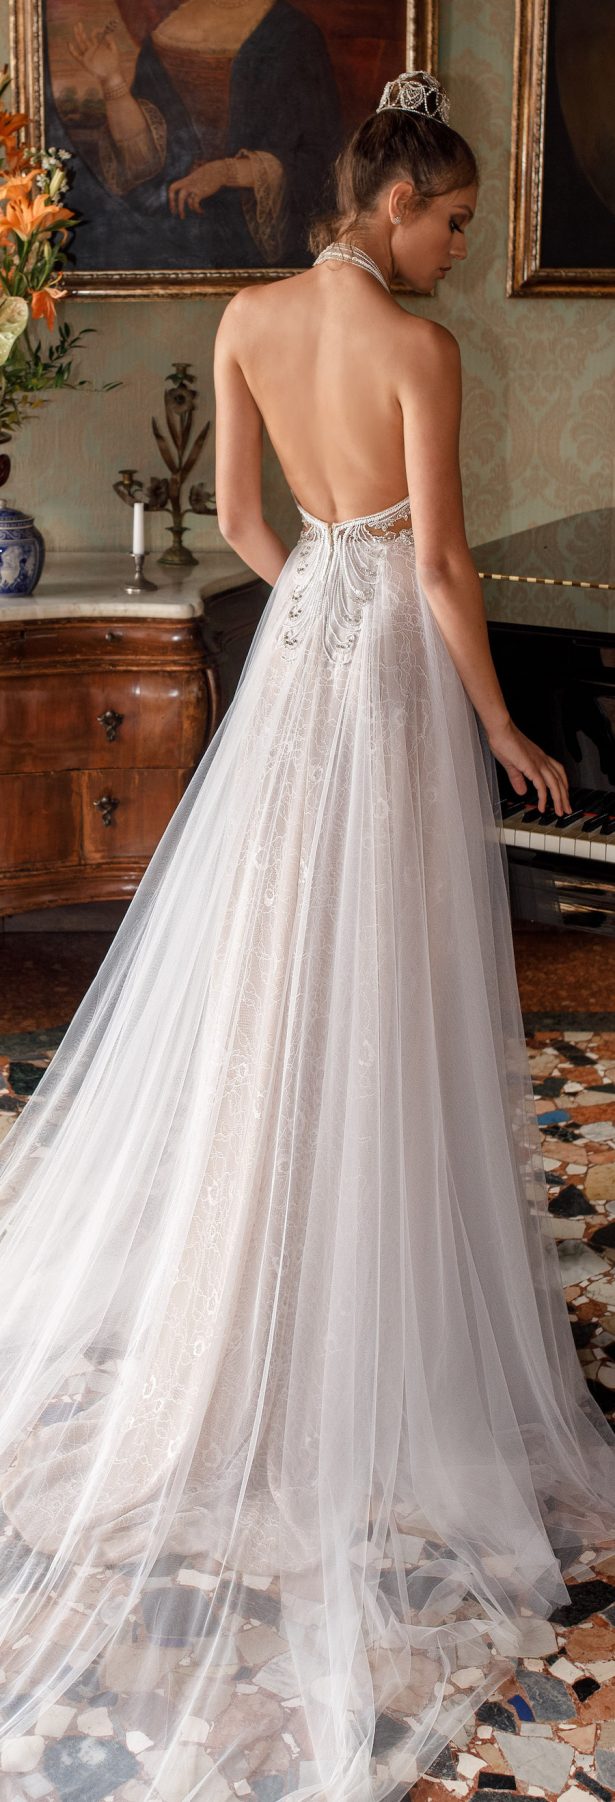 Julie Vino Spring 2018 Wedding Dress -Venezia Bridal Collection